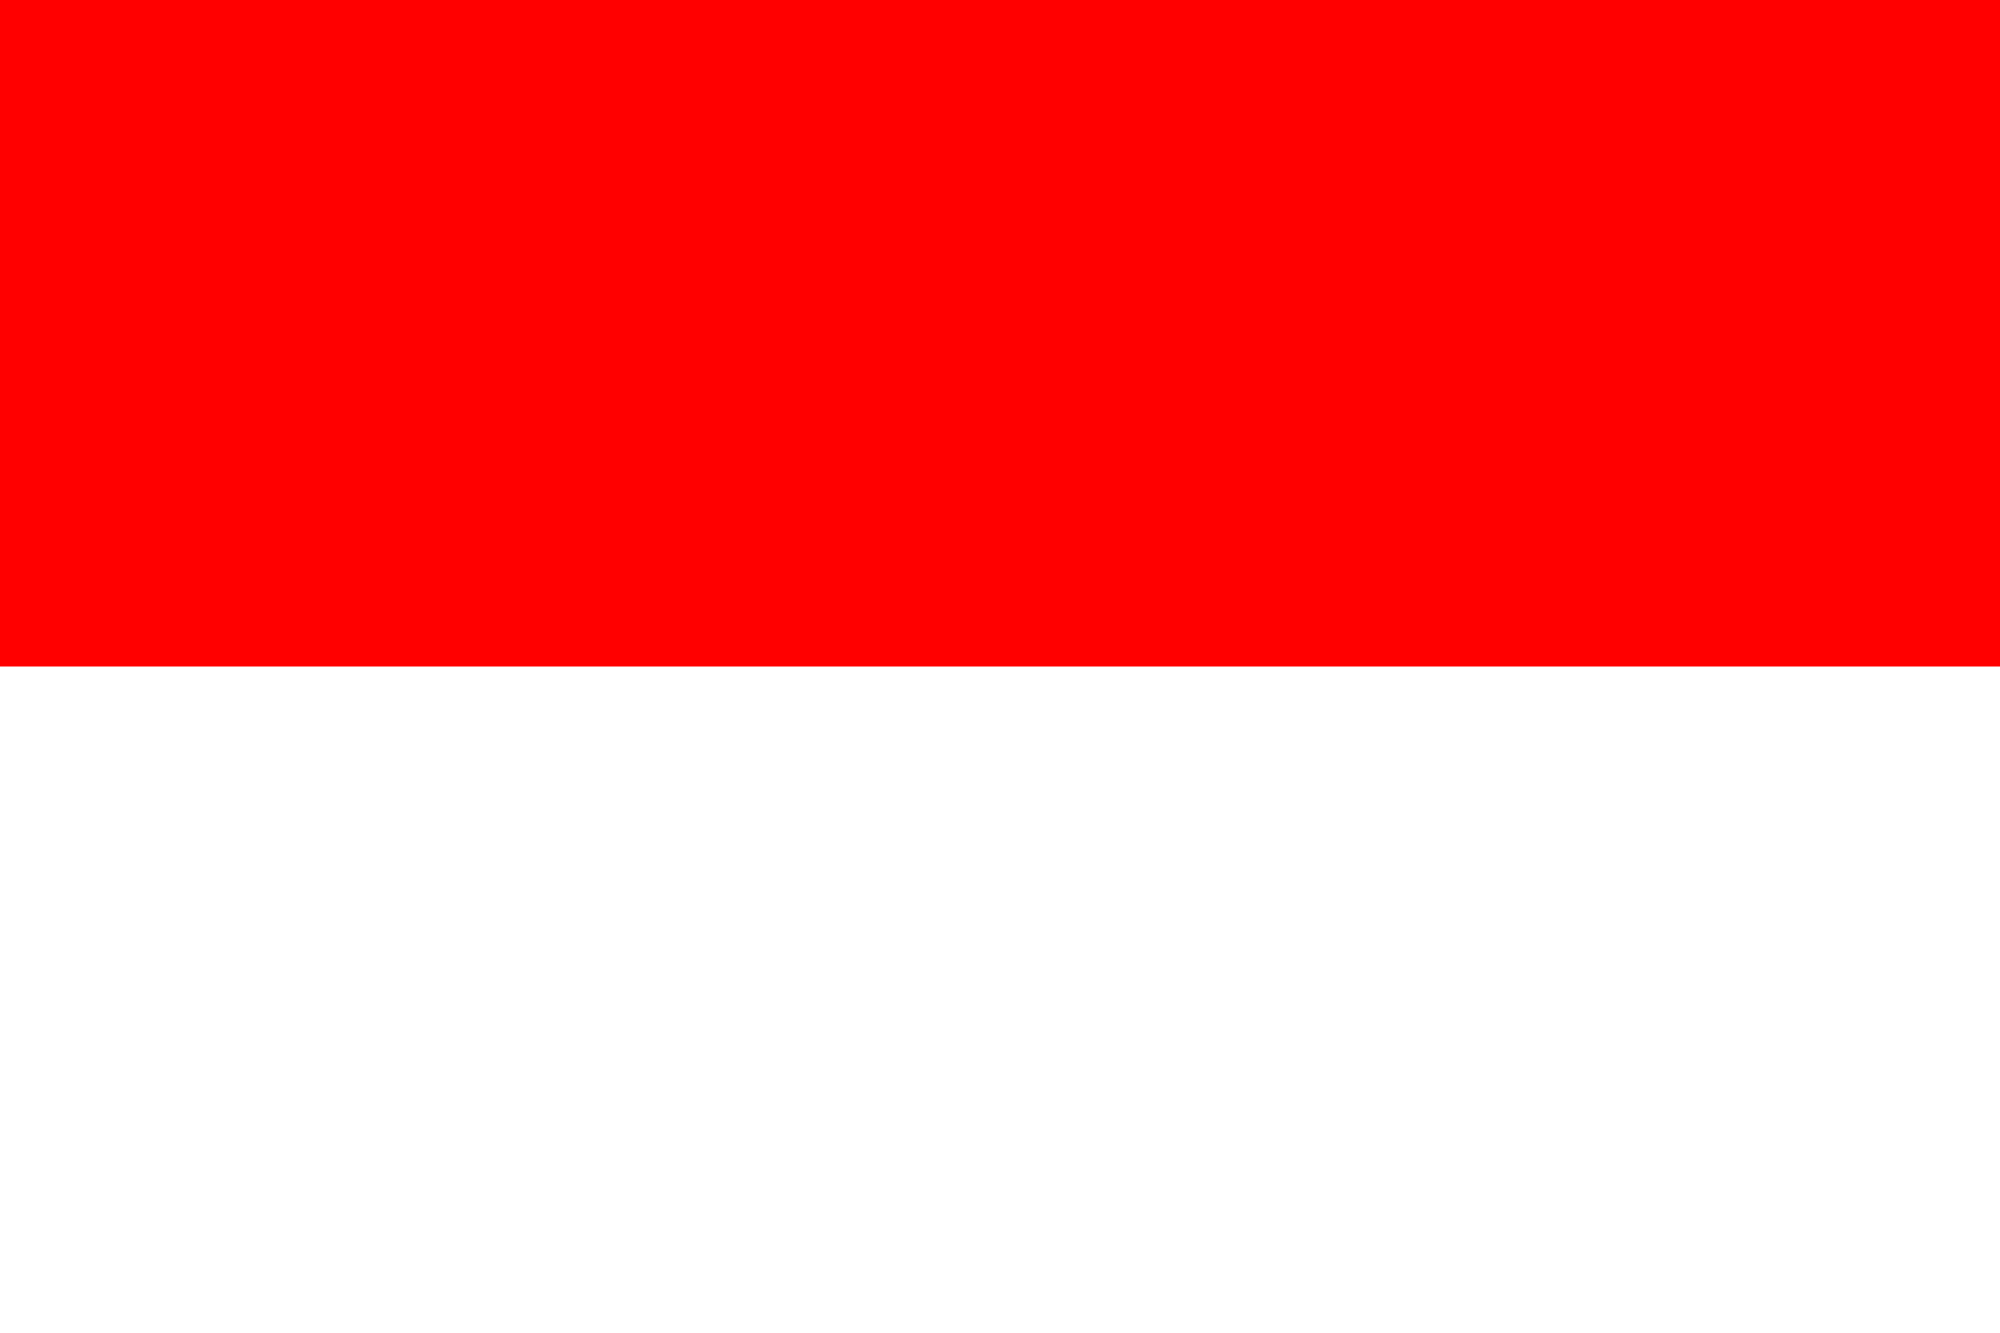 Indonesian Flag Image